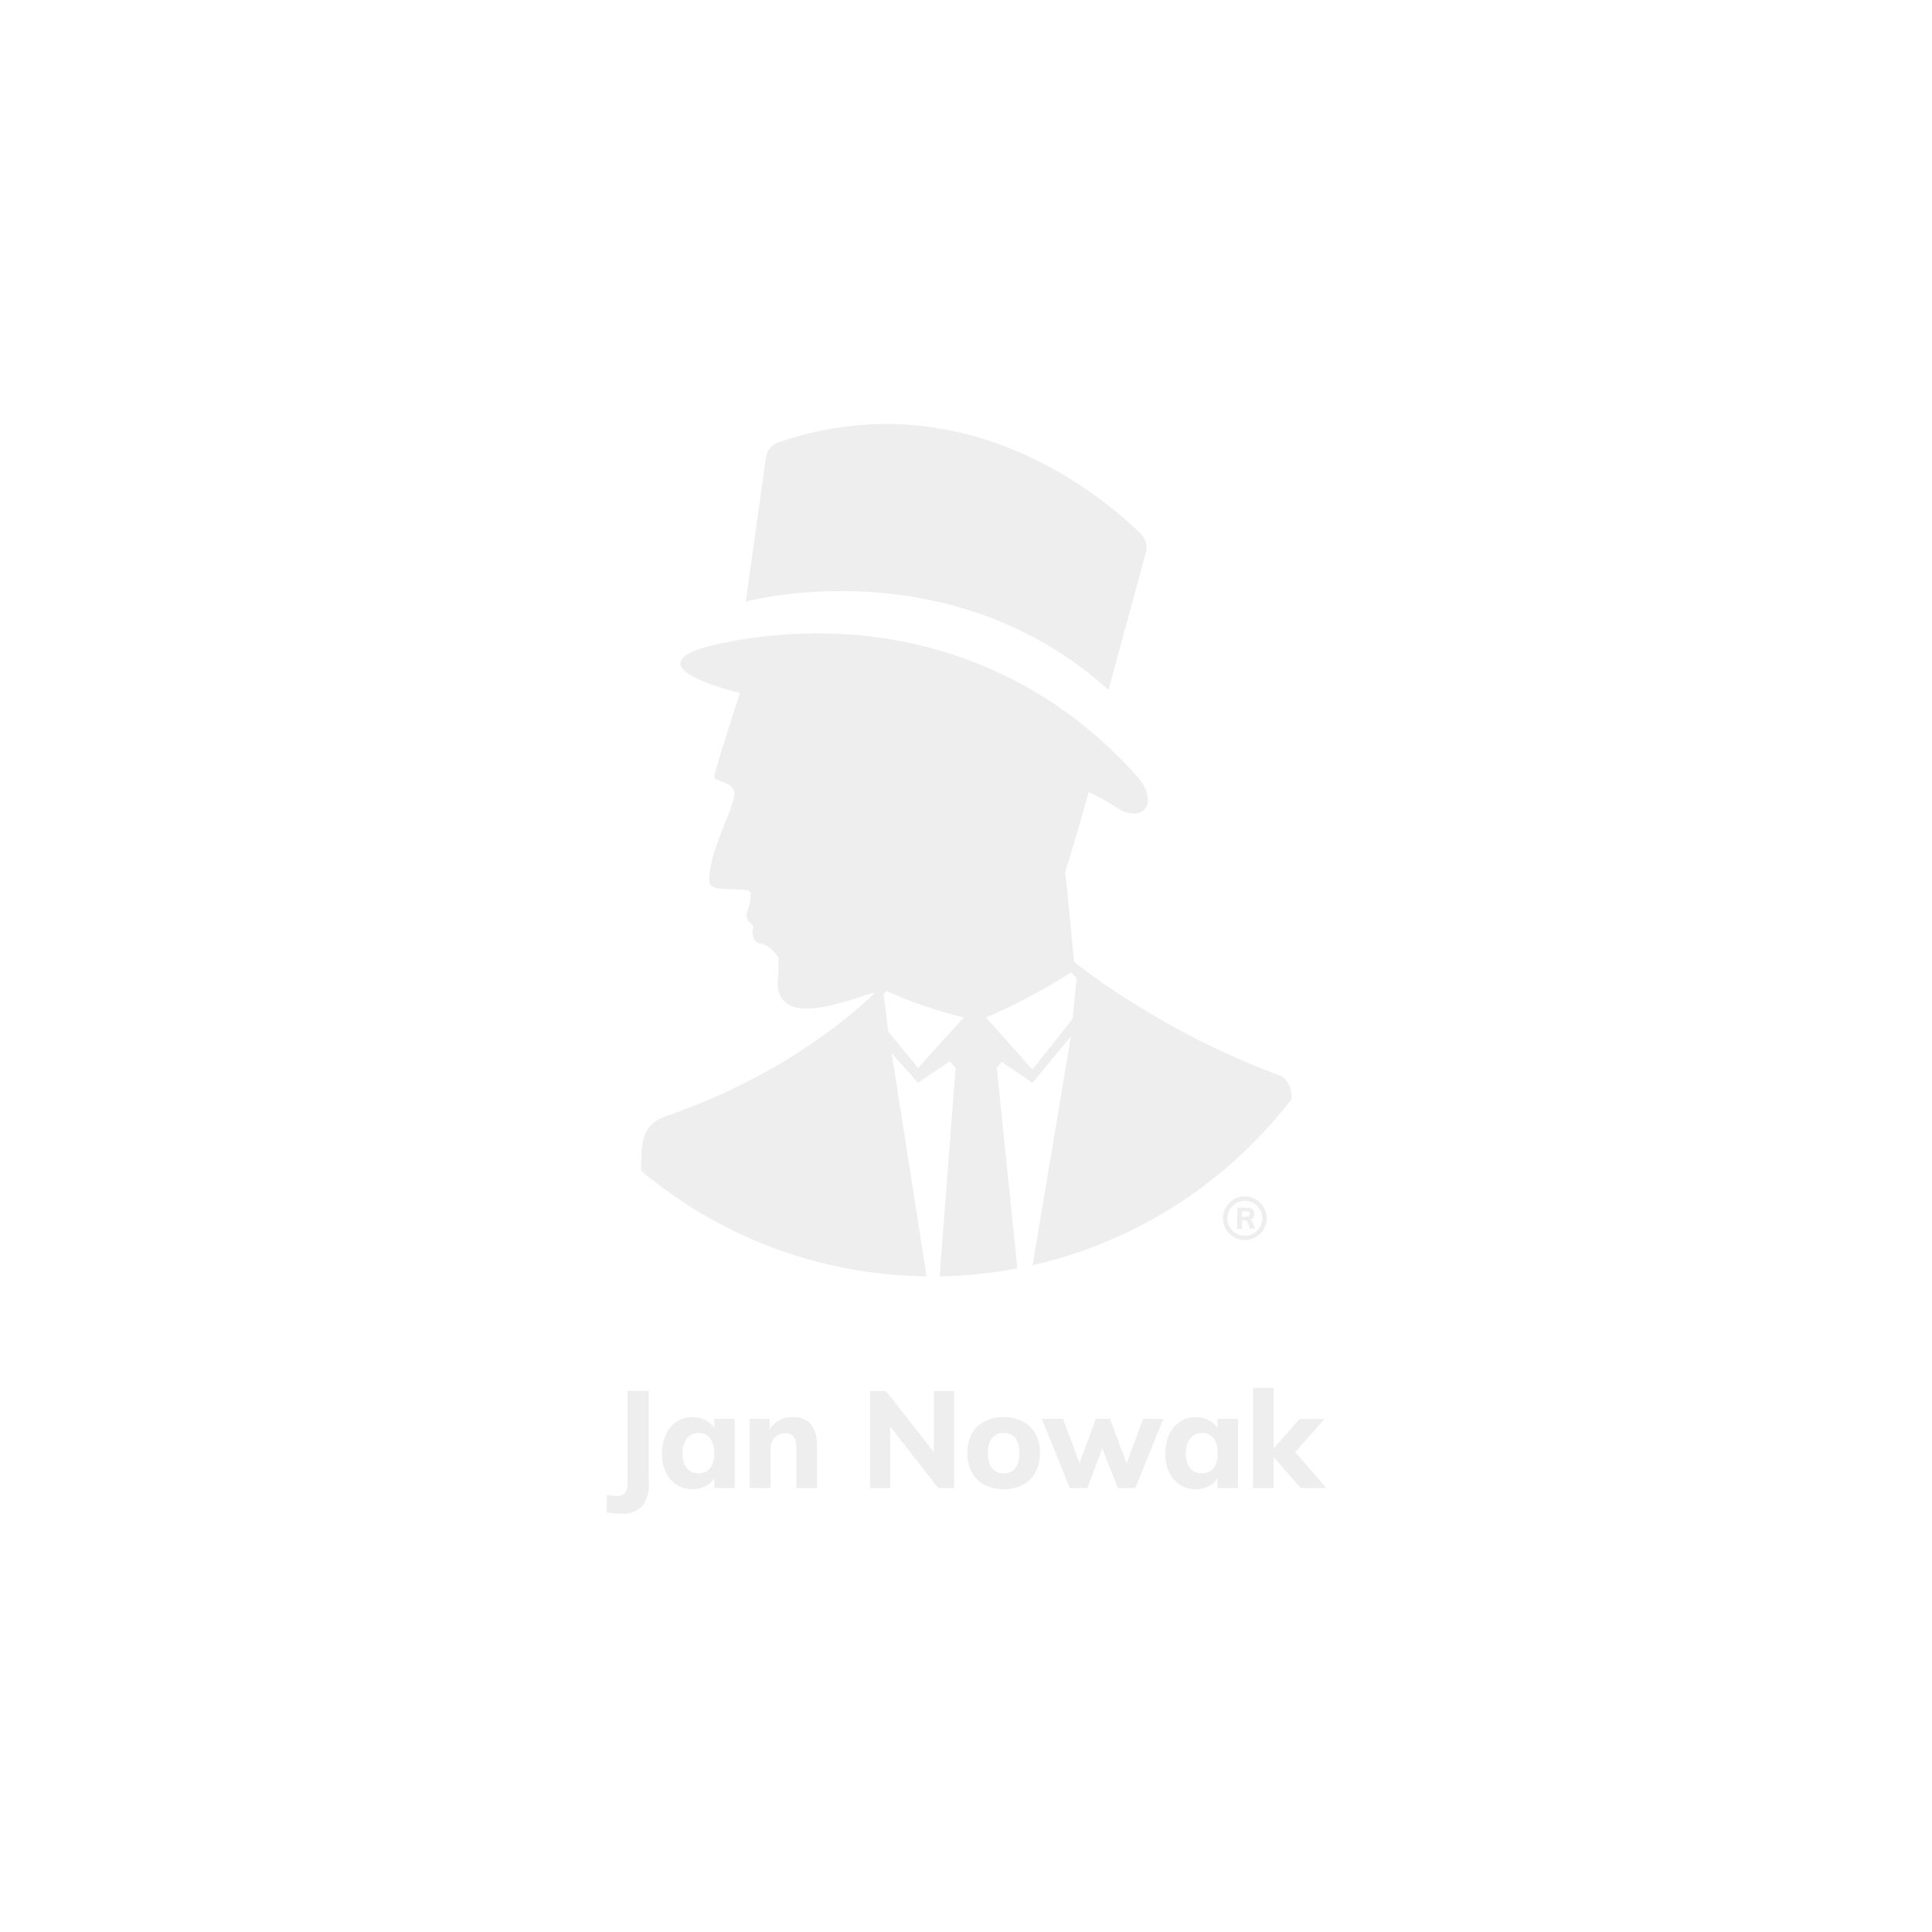 JAN NOWAK model ALEX 450x1850x400 biurowa szafa metalowa na akta: biała